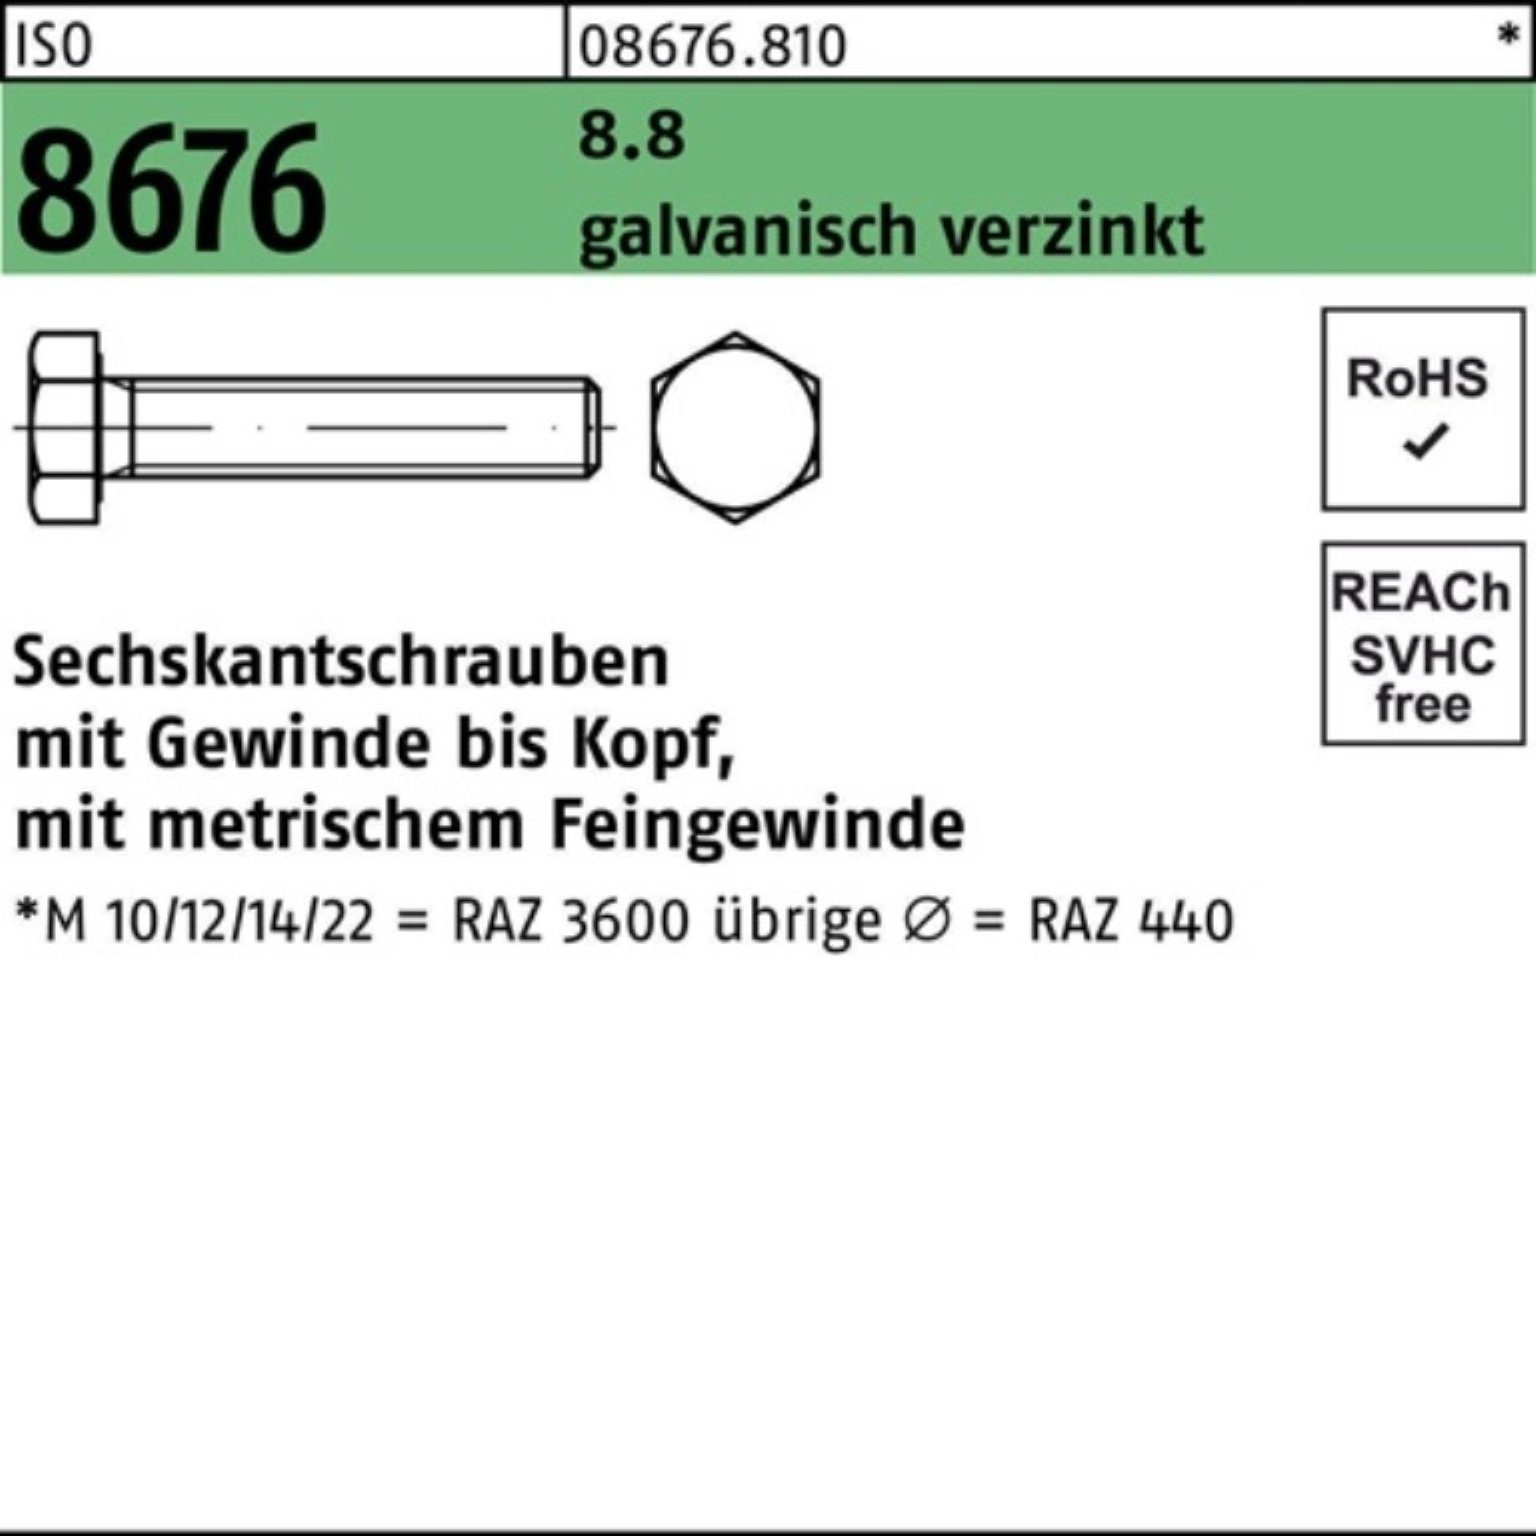 Reyher Sechskantschraube 100er Pack Sechskantschraube 8676 galv.verz. VG ISO 50 8.8 40 M16x1,5x